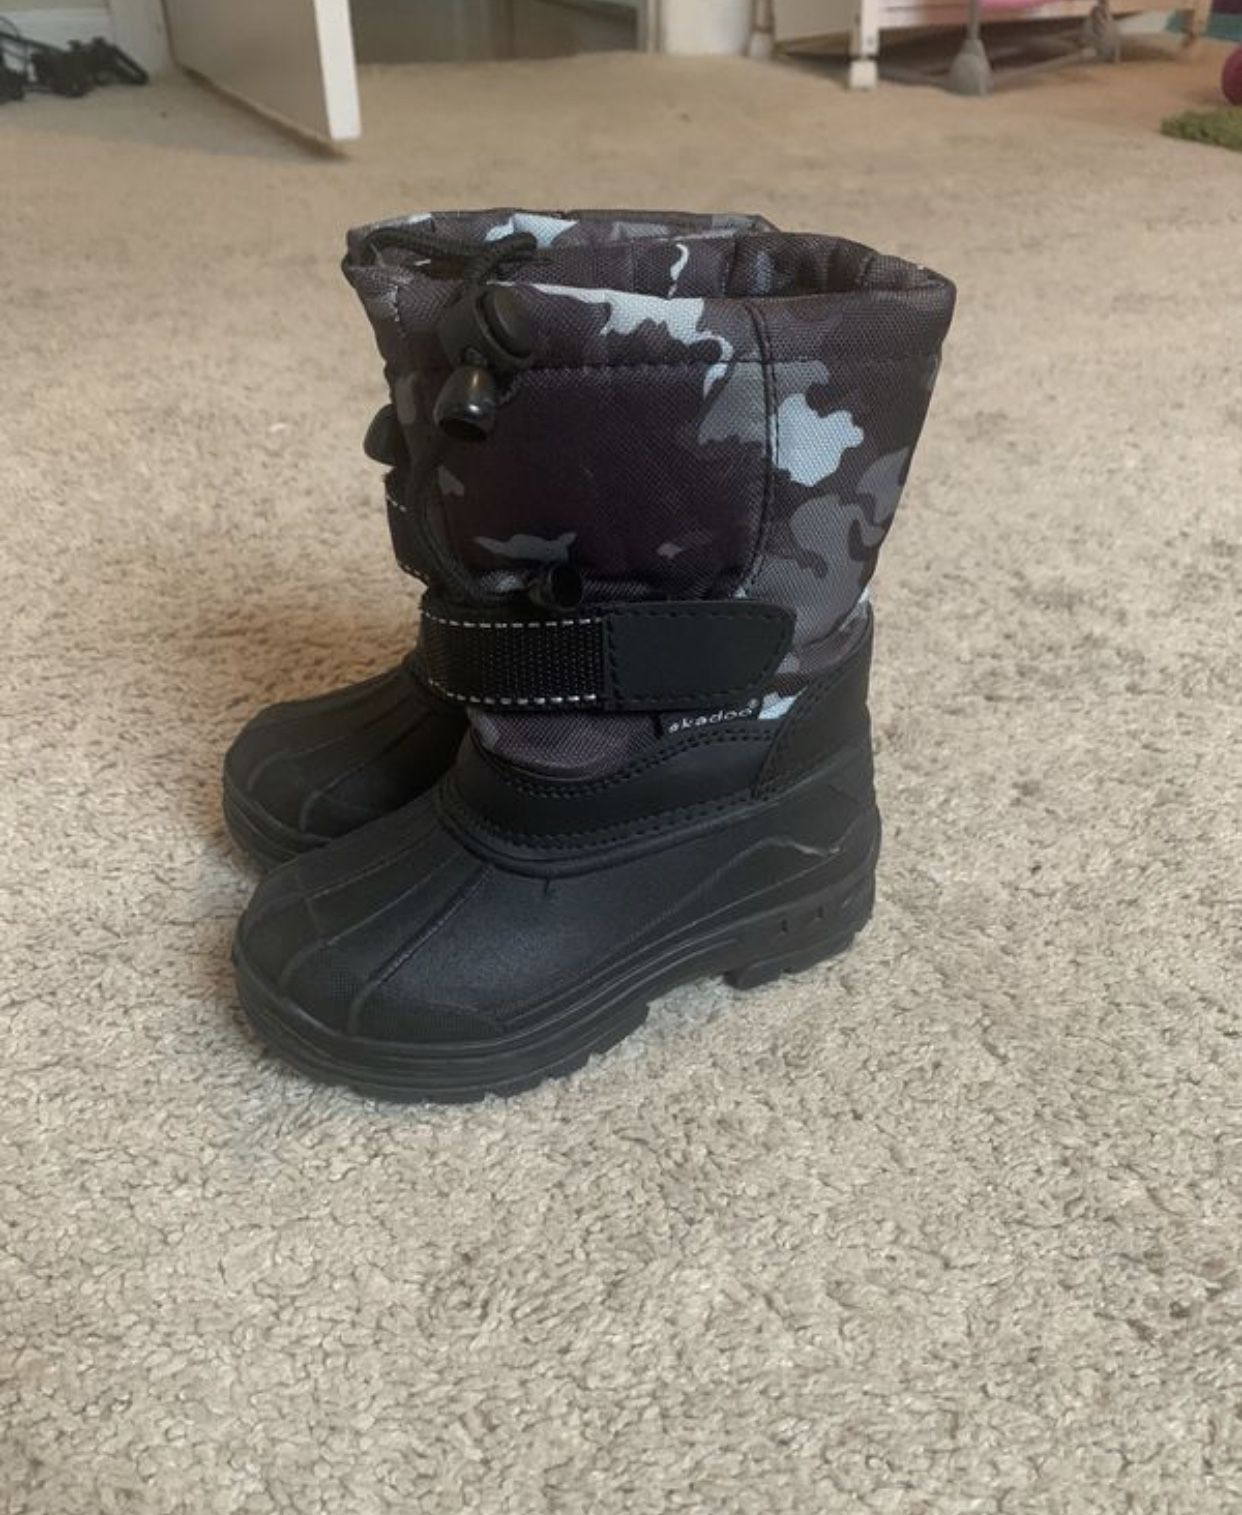 Snow boots size 6c